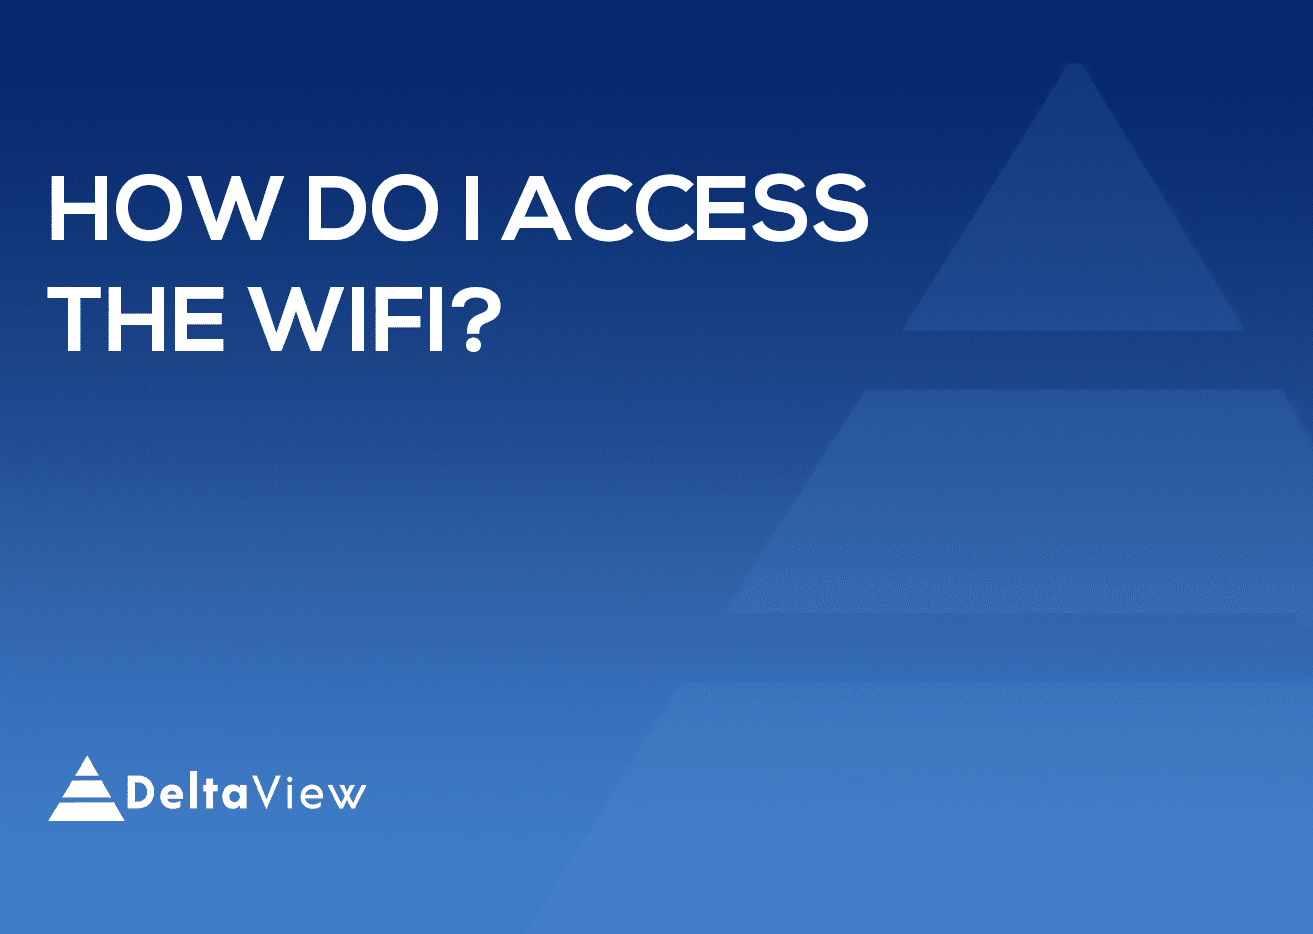 How do I access the WiFi?